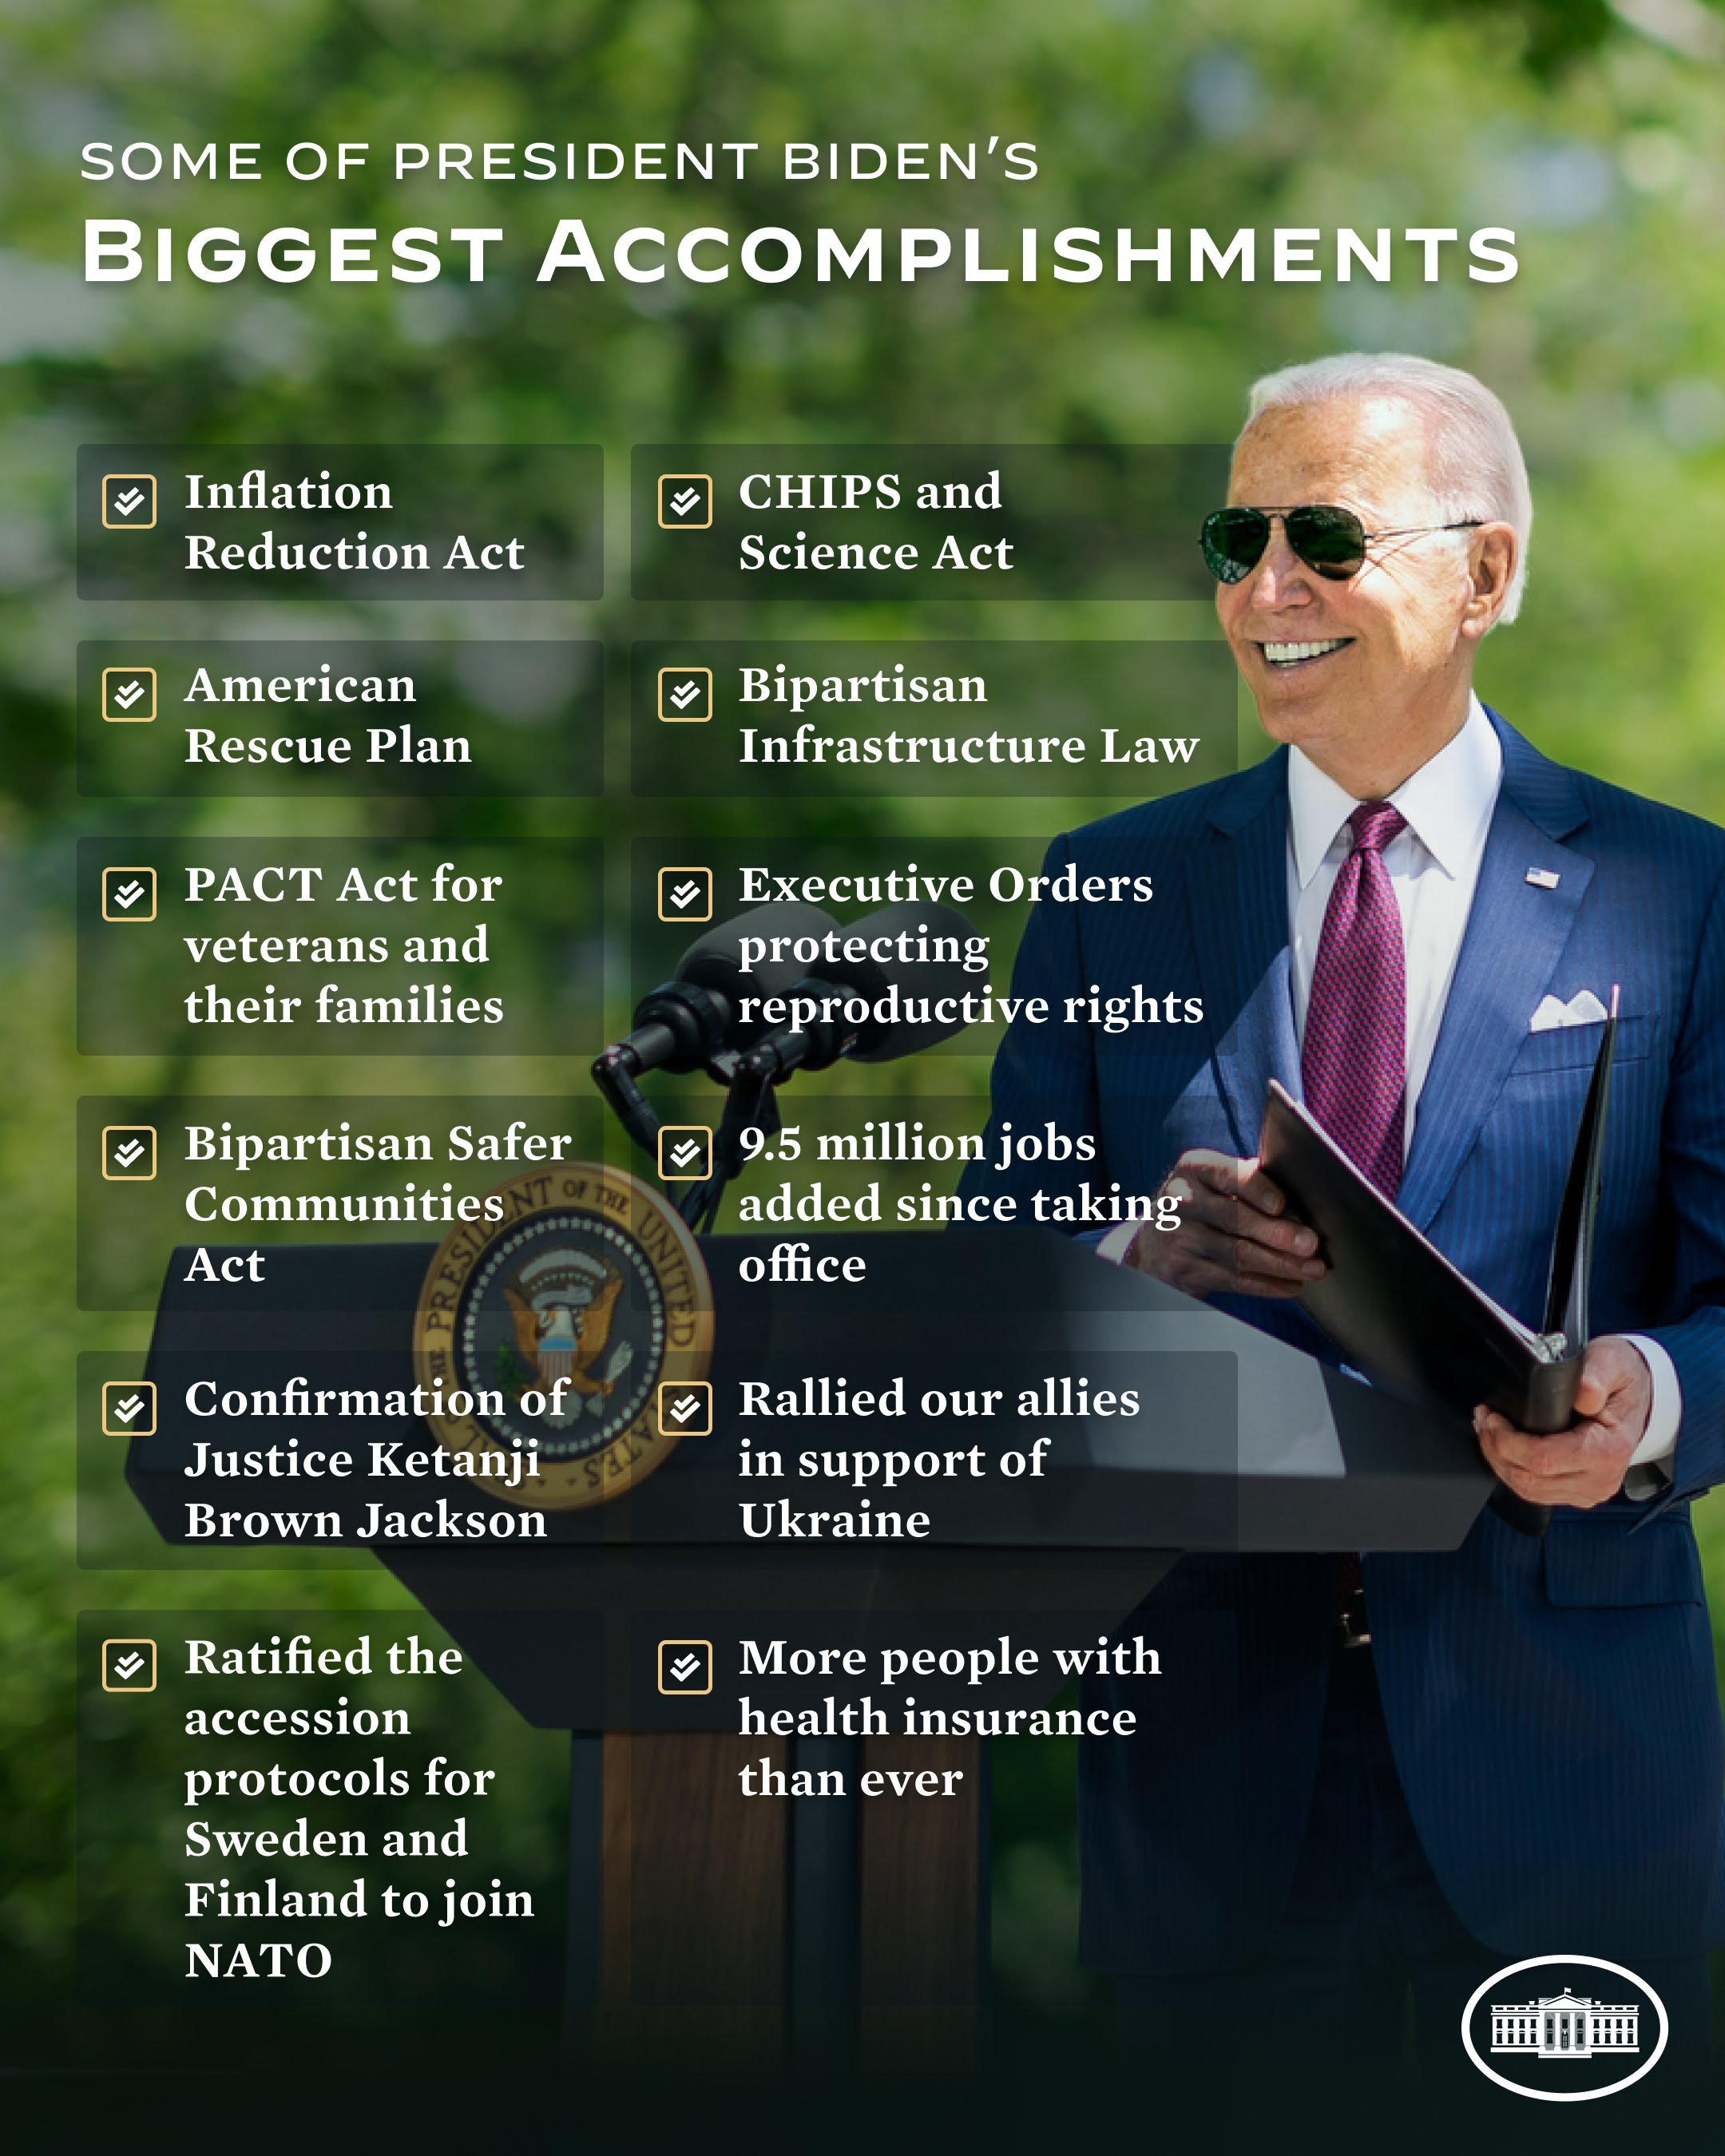 Biden's accomplishments